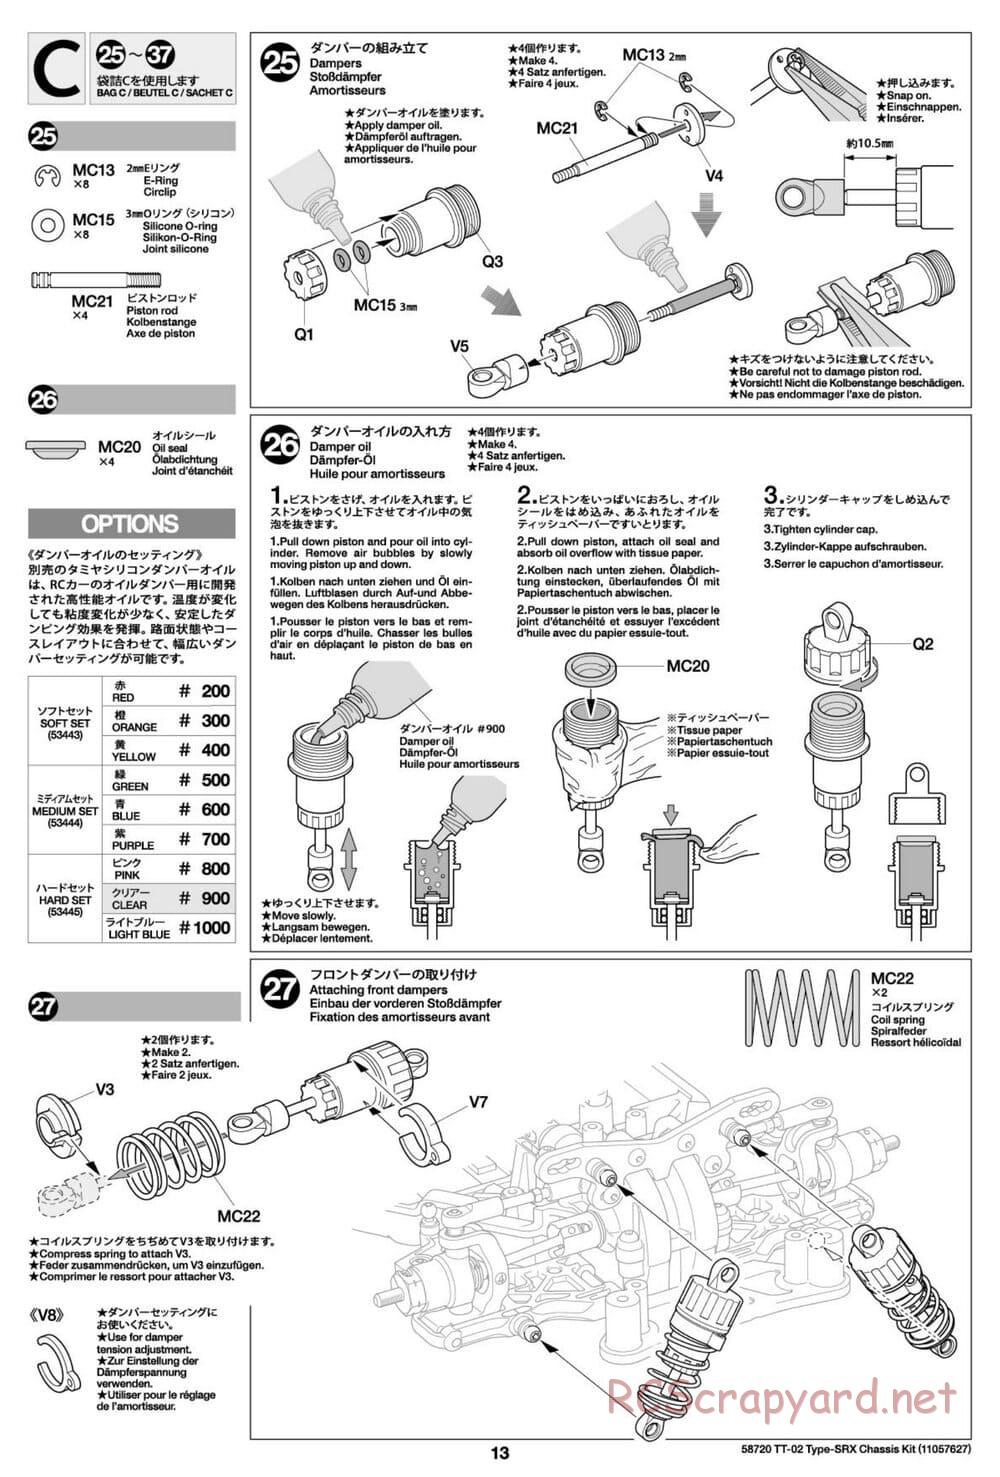 Tamiya - TT-02 Type-SRX Chassis - Manual - Page 13